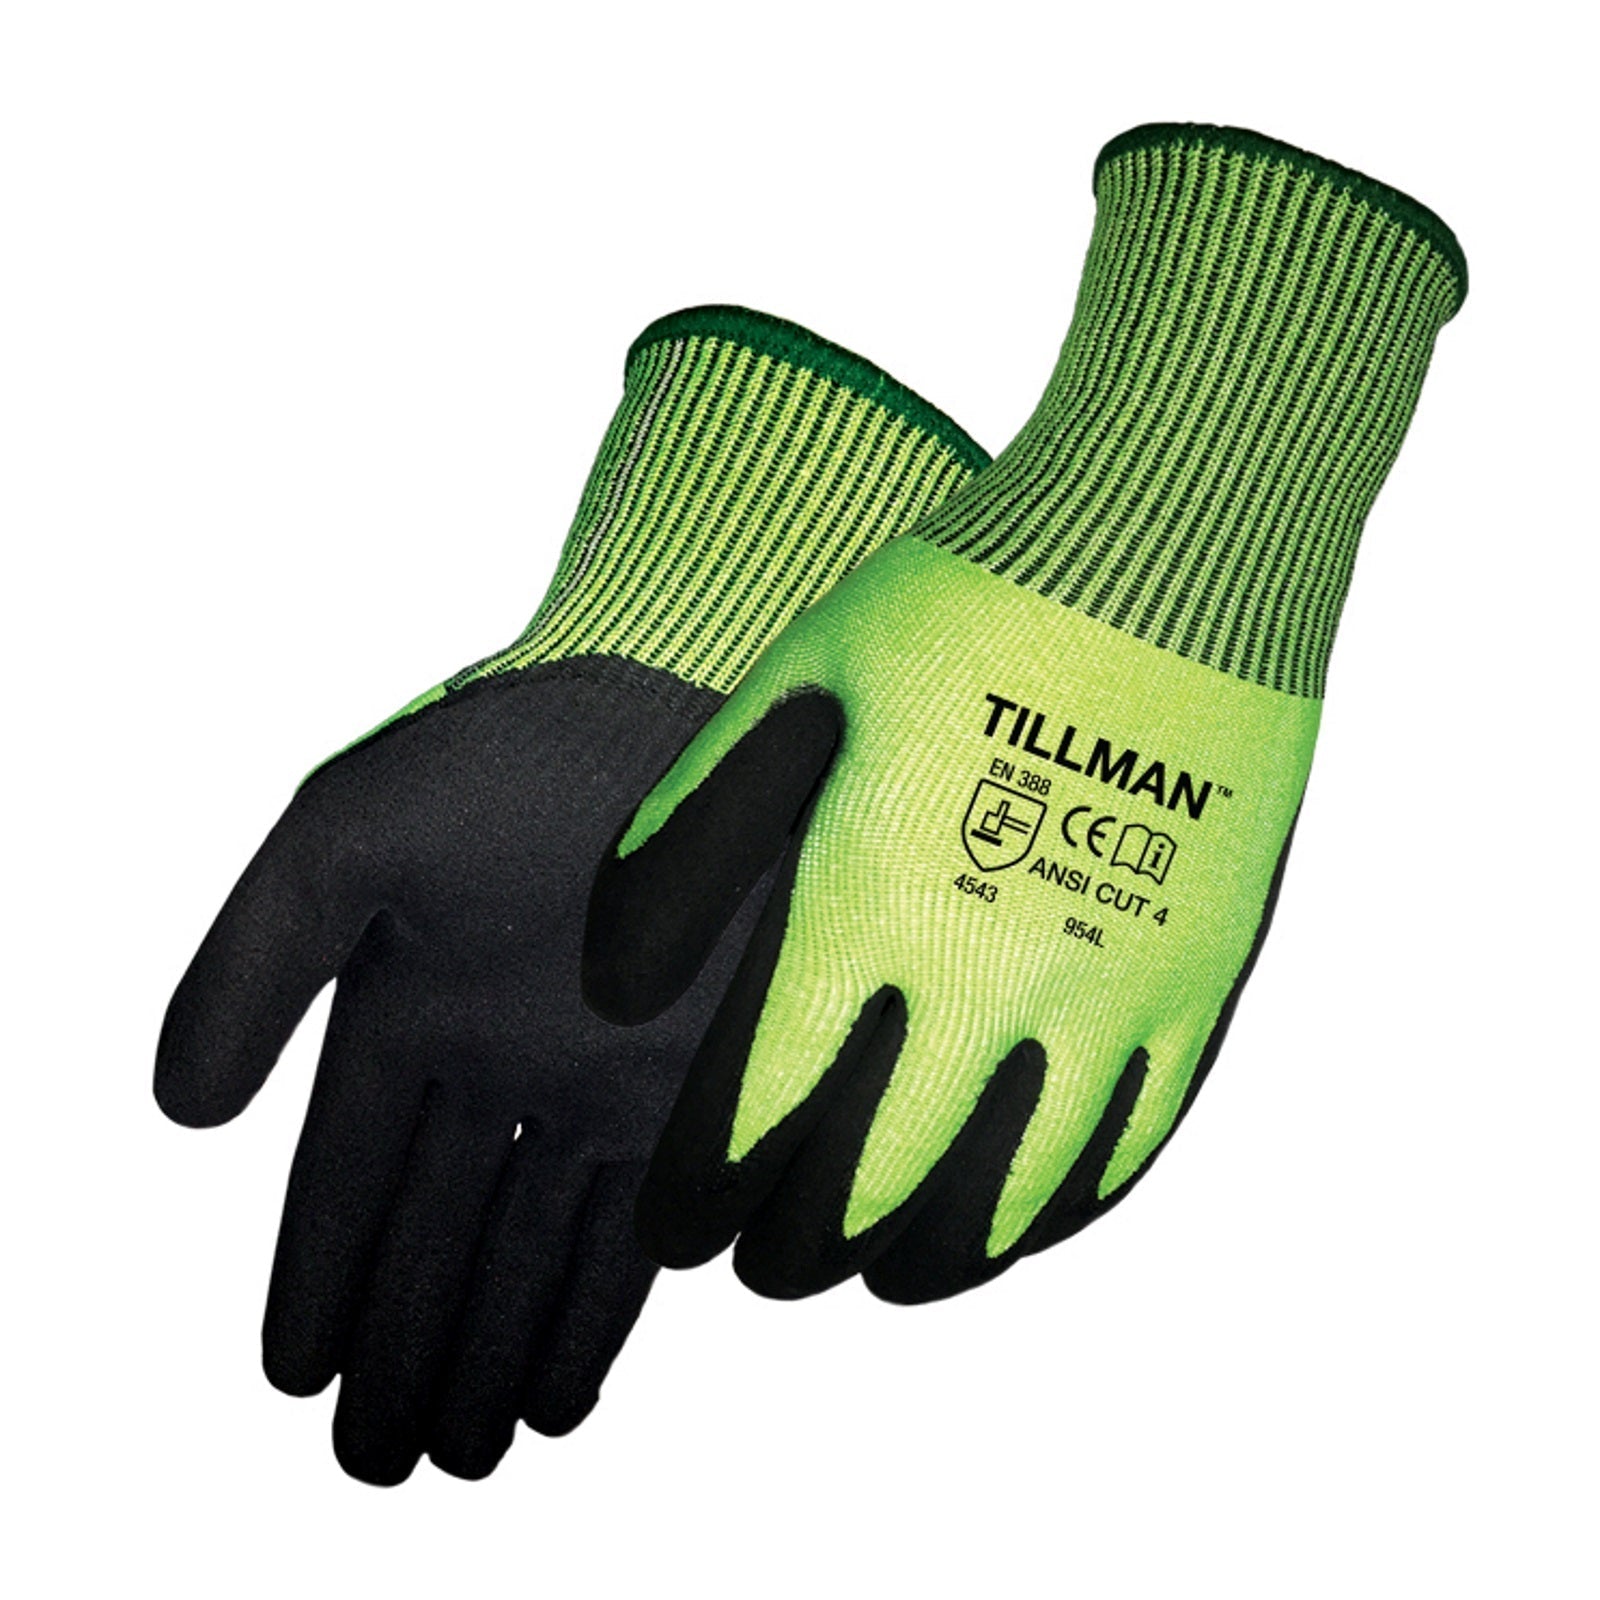 Tillman 954 HPPE Cut Resistant Gloves - Large